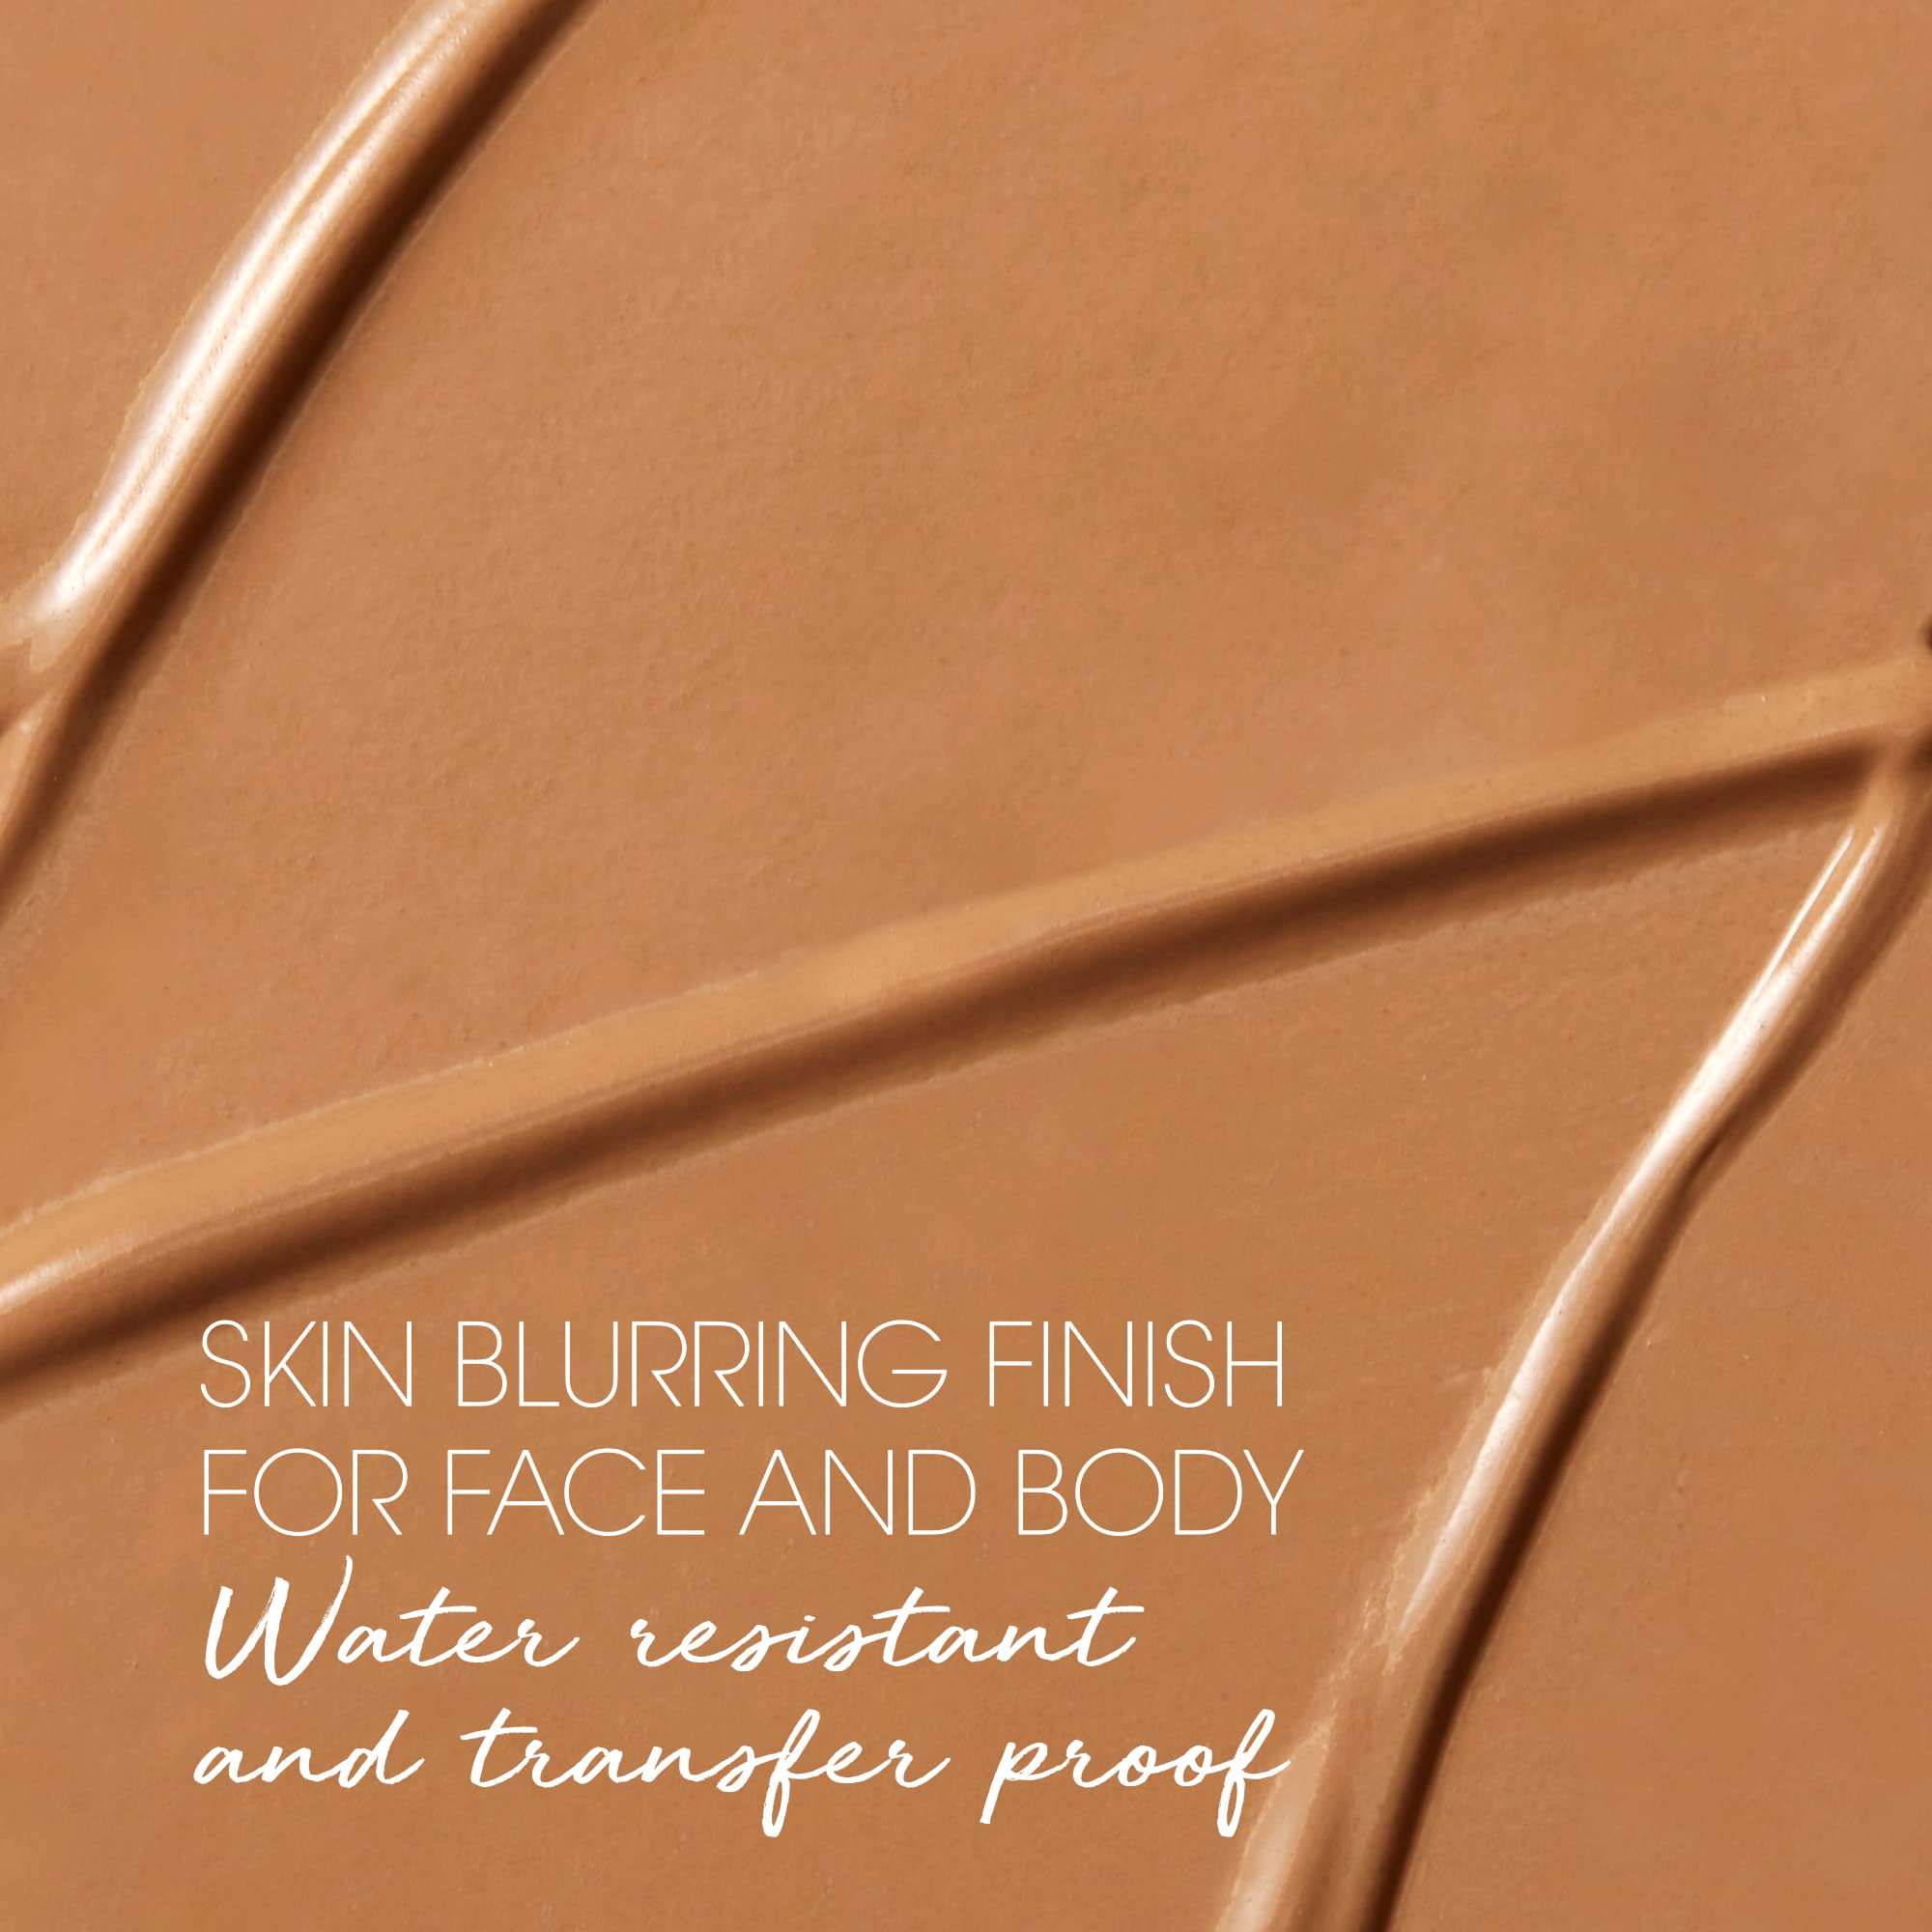 St. Tropez Instant Glow Face & Body Bronzer Makeup 100ml, 3.38 fl. oz.